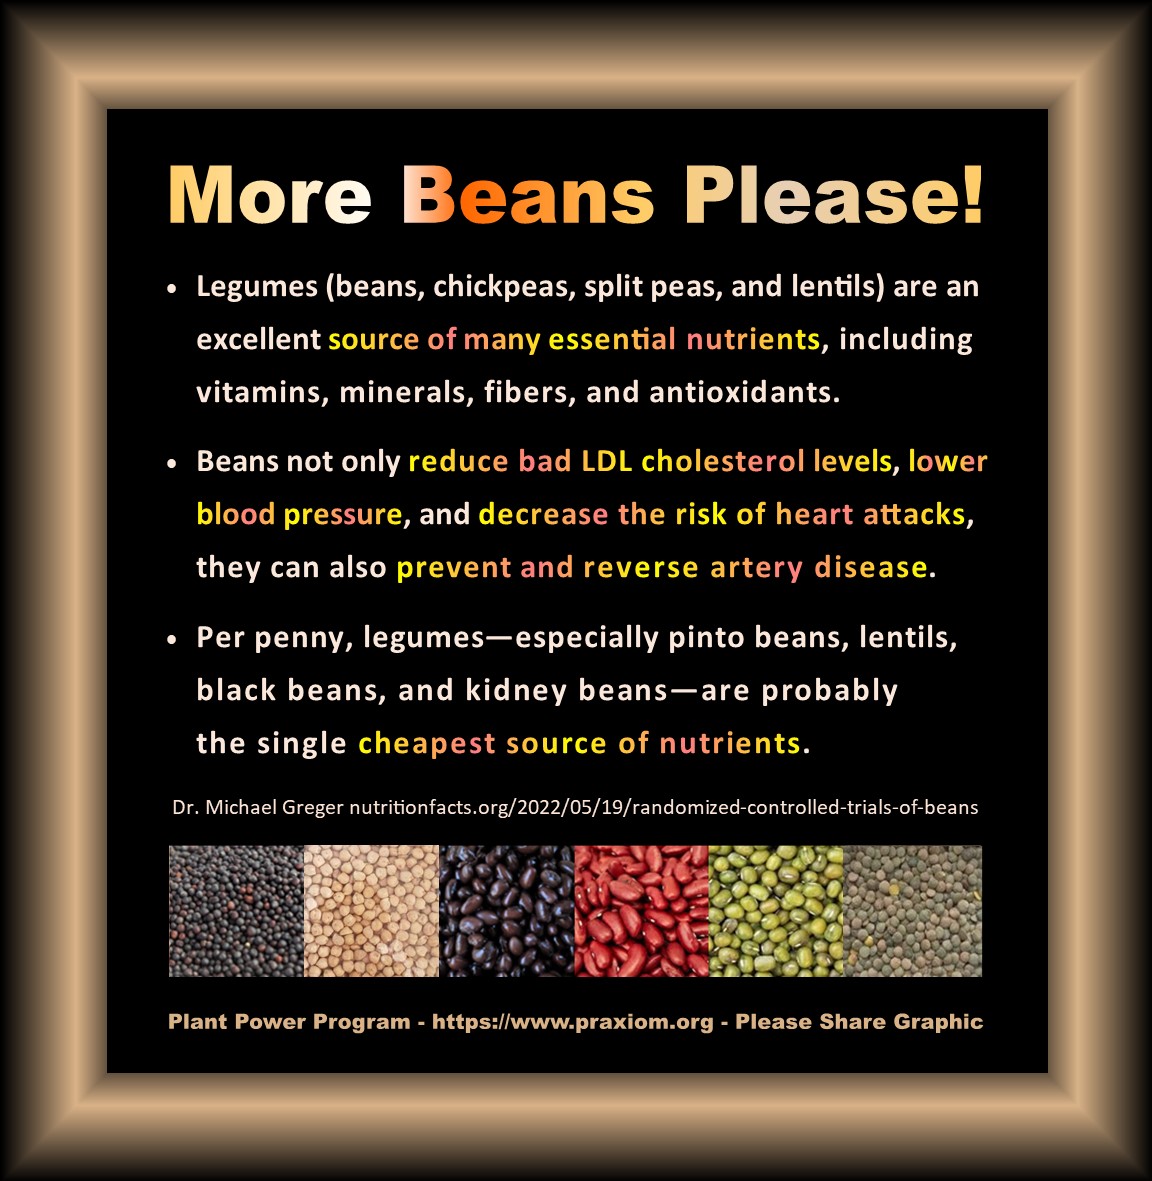 More Beans Please!